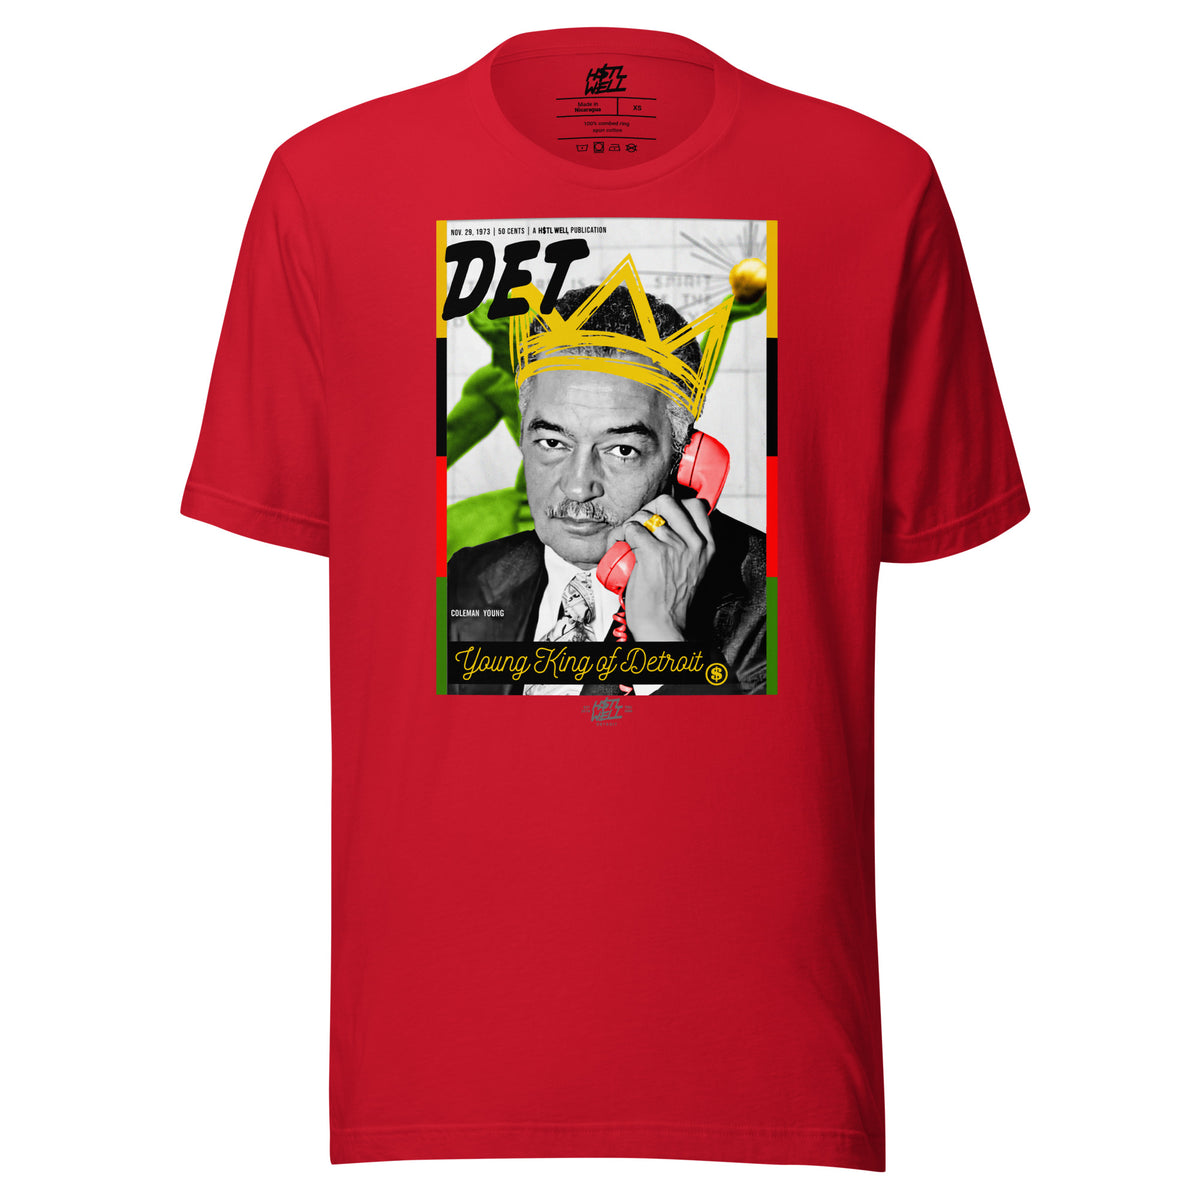 on Demand 313 Detroit Area Code Unisex T-Shirt 2XL